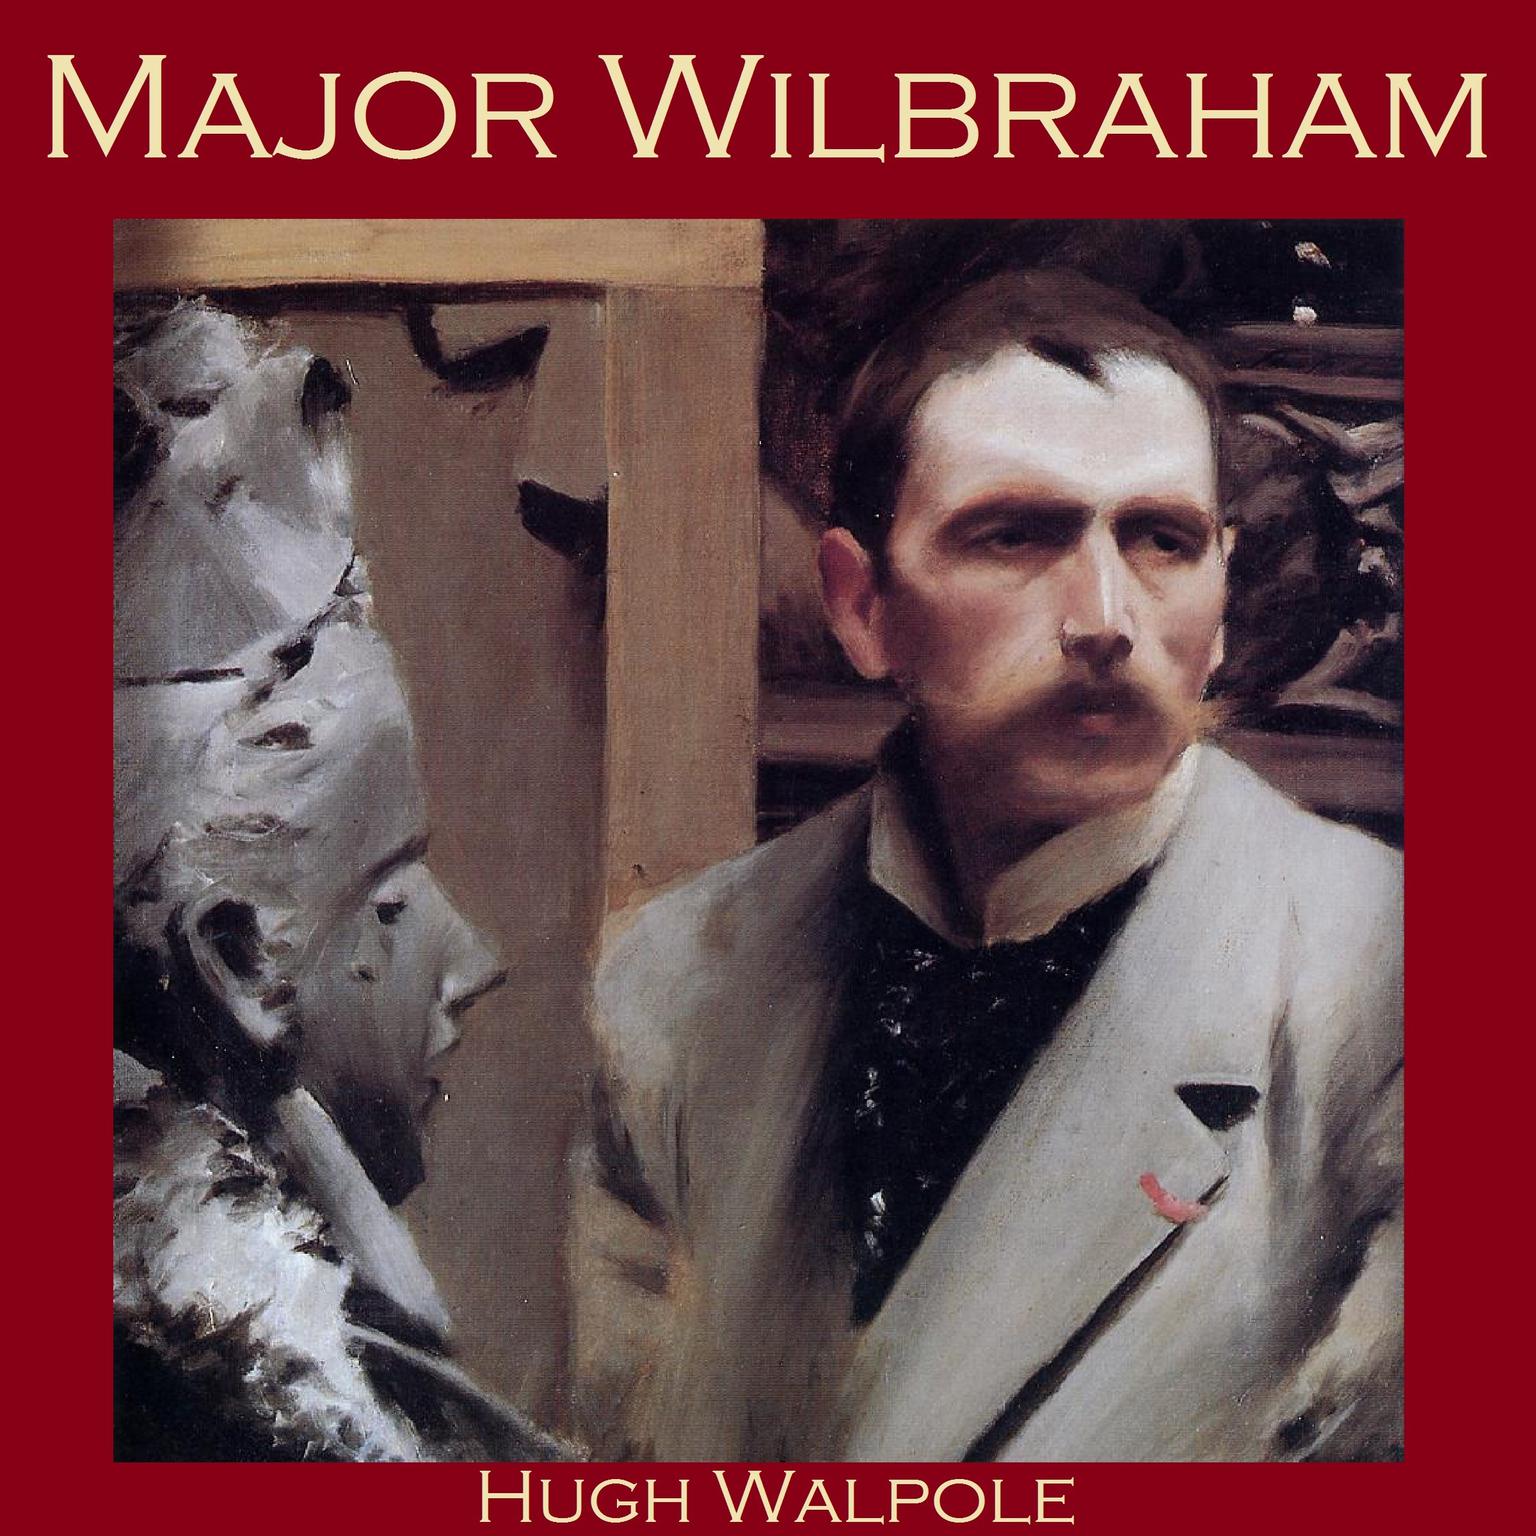 Major Wilbraham Audiobook, by Hugh Walpole